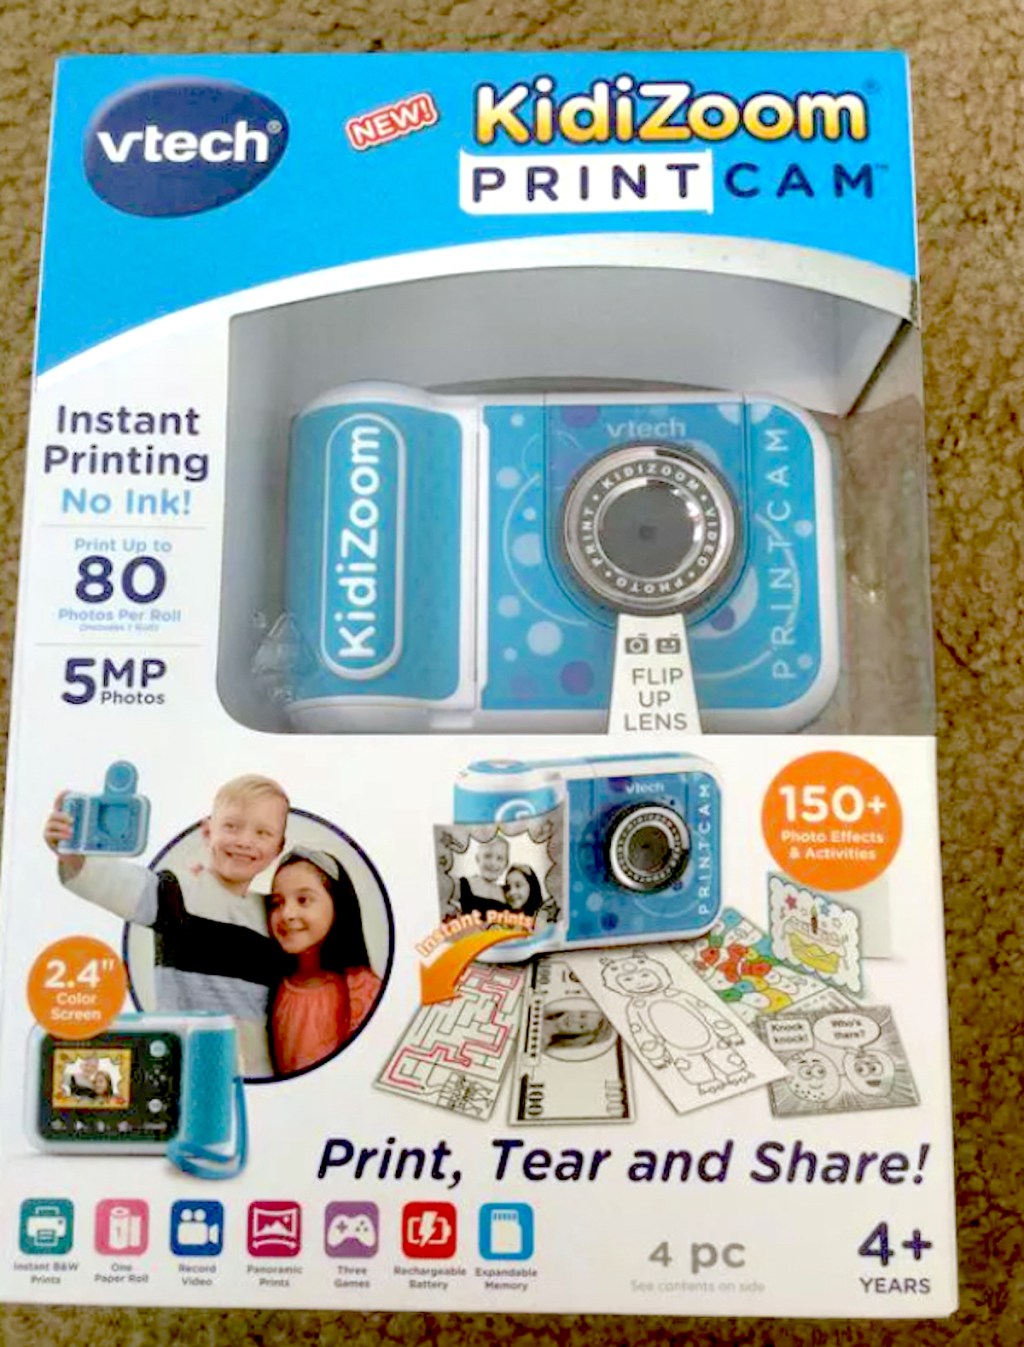 VTech KidiZoom PrintCam Digital Camera and Printer in box